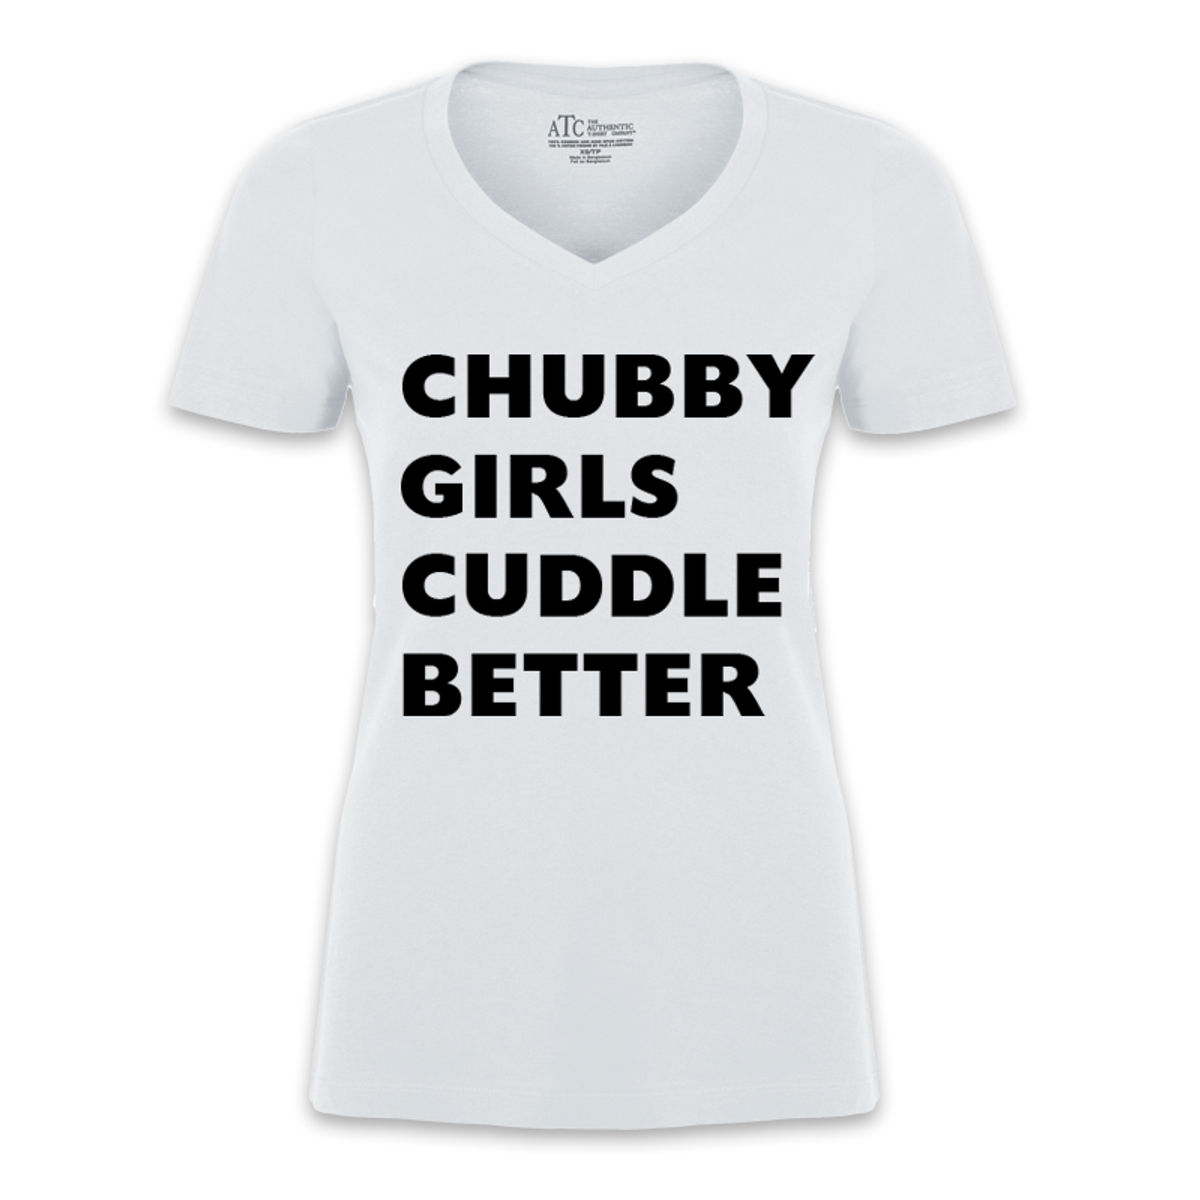 Women's Chubby Girls Cuddle Better - Tshirt - The Inked Boys Shop